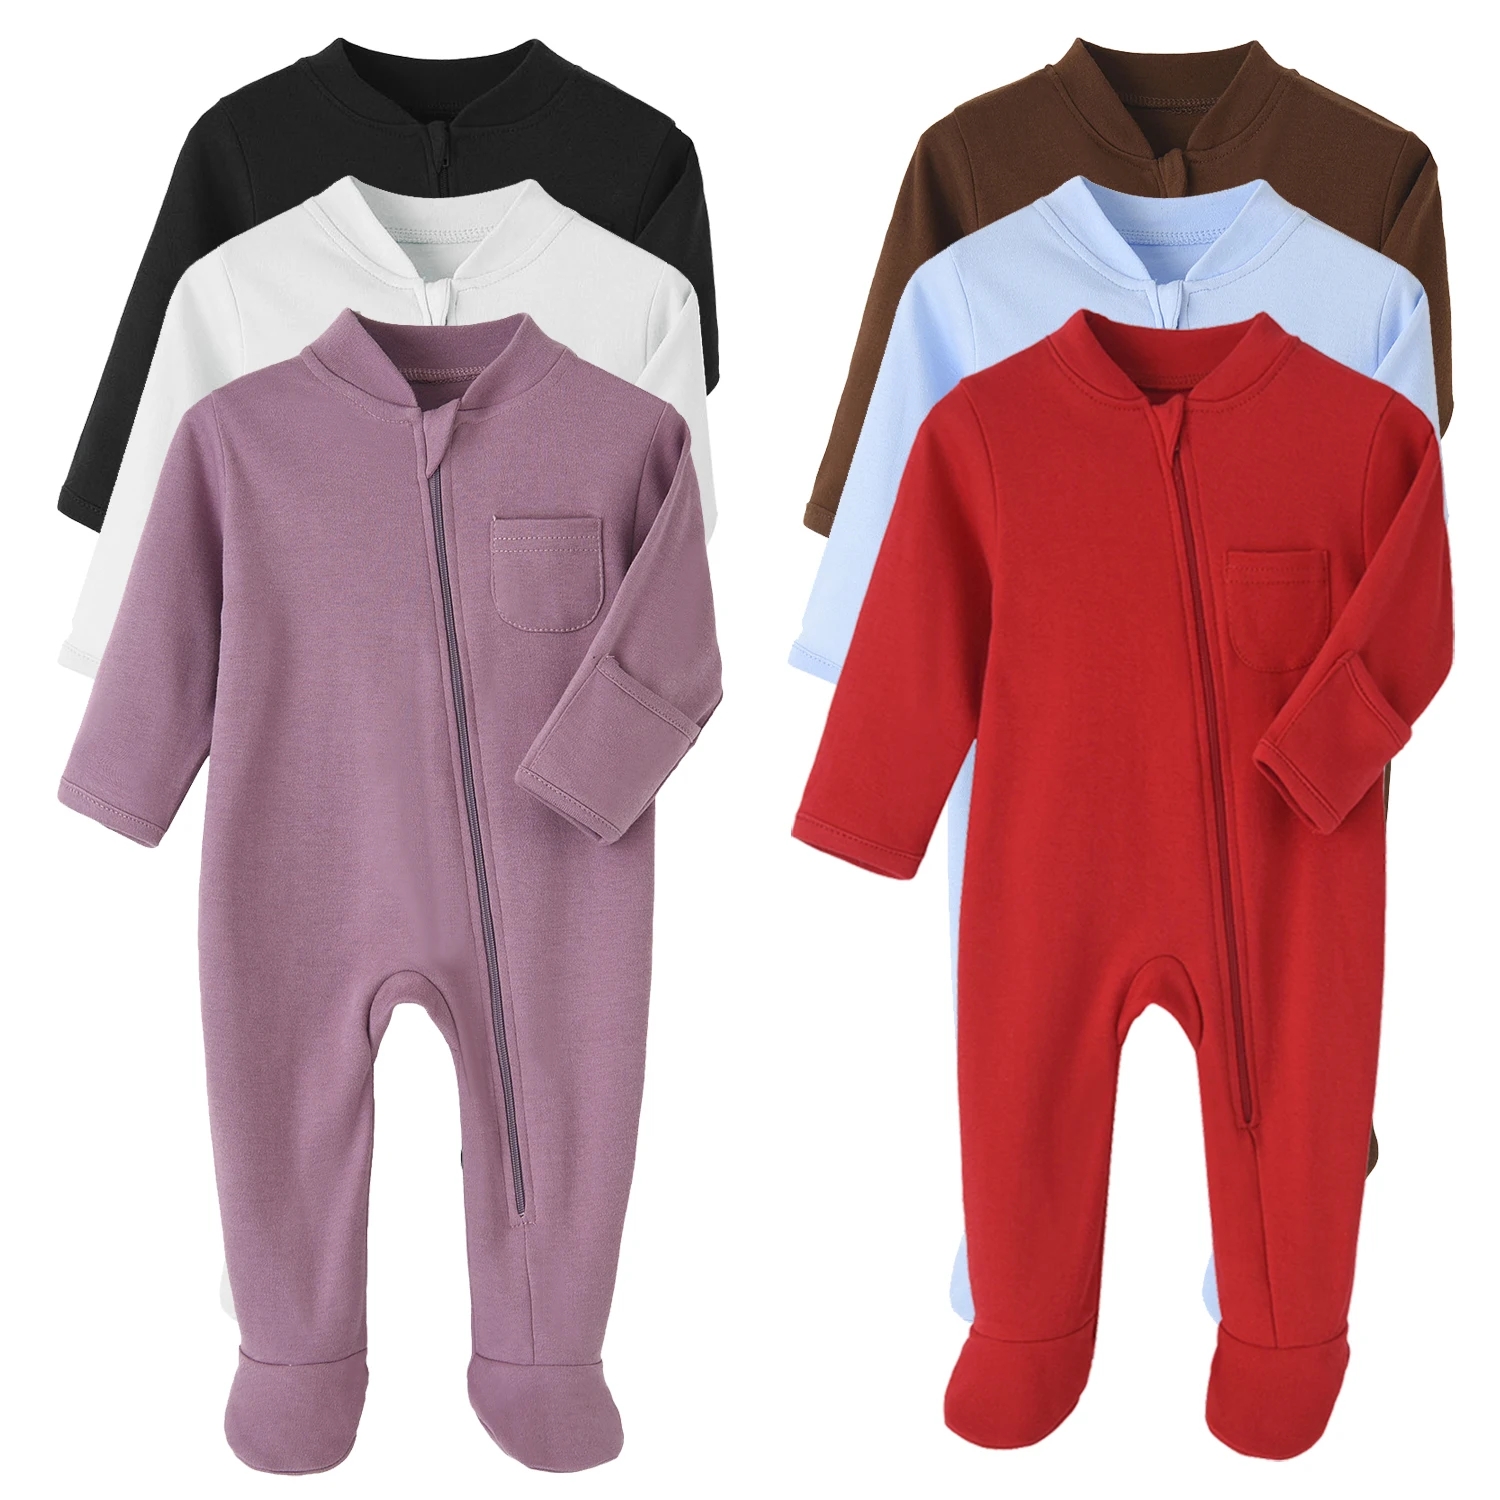 Baby Rompers Newborn Sleepsuits Pajamas Sleepwear Sleepers 100% Cotton Ropa De Bebe Grows Growing Cute Candy Colors Outfits